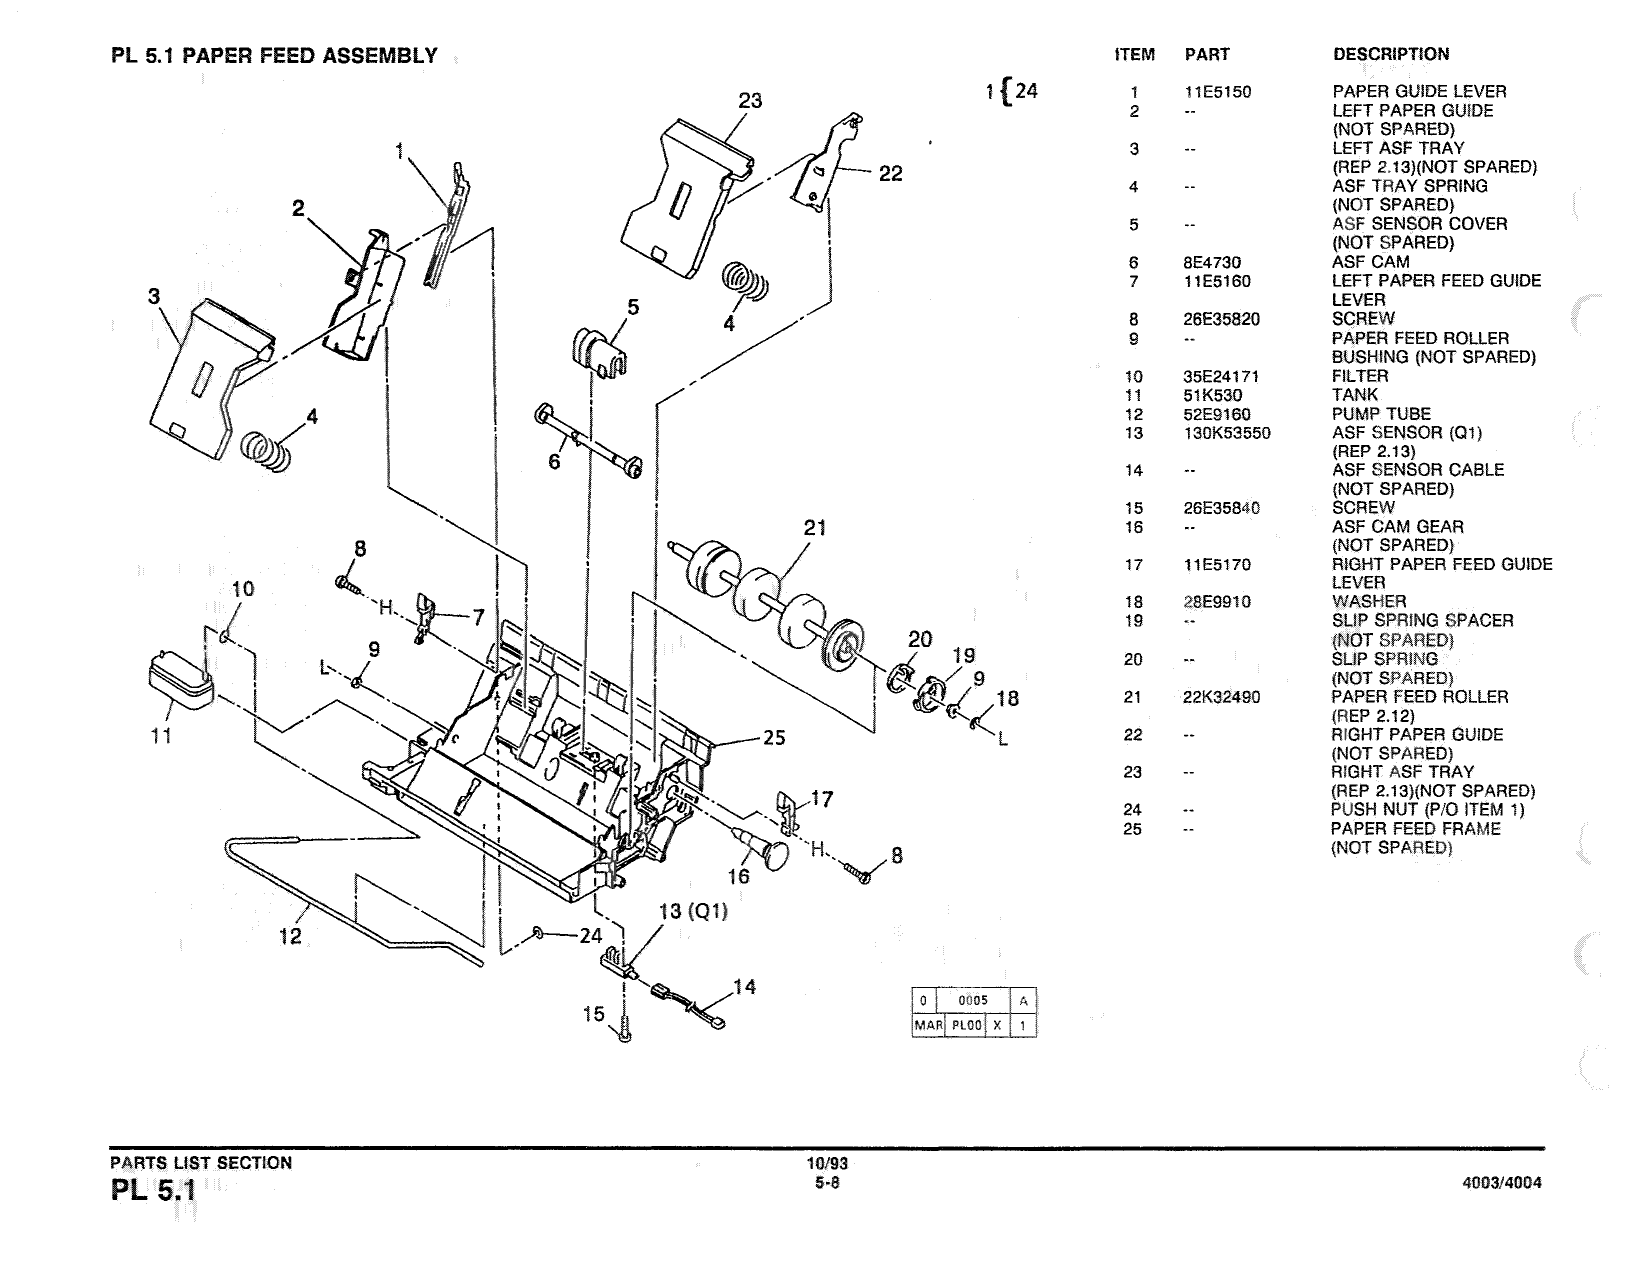 Xerox Printer 4003 4004 Dot-Matrix Printer Parts List and Service Manual-5